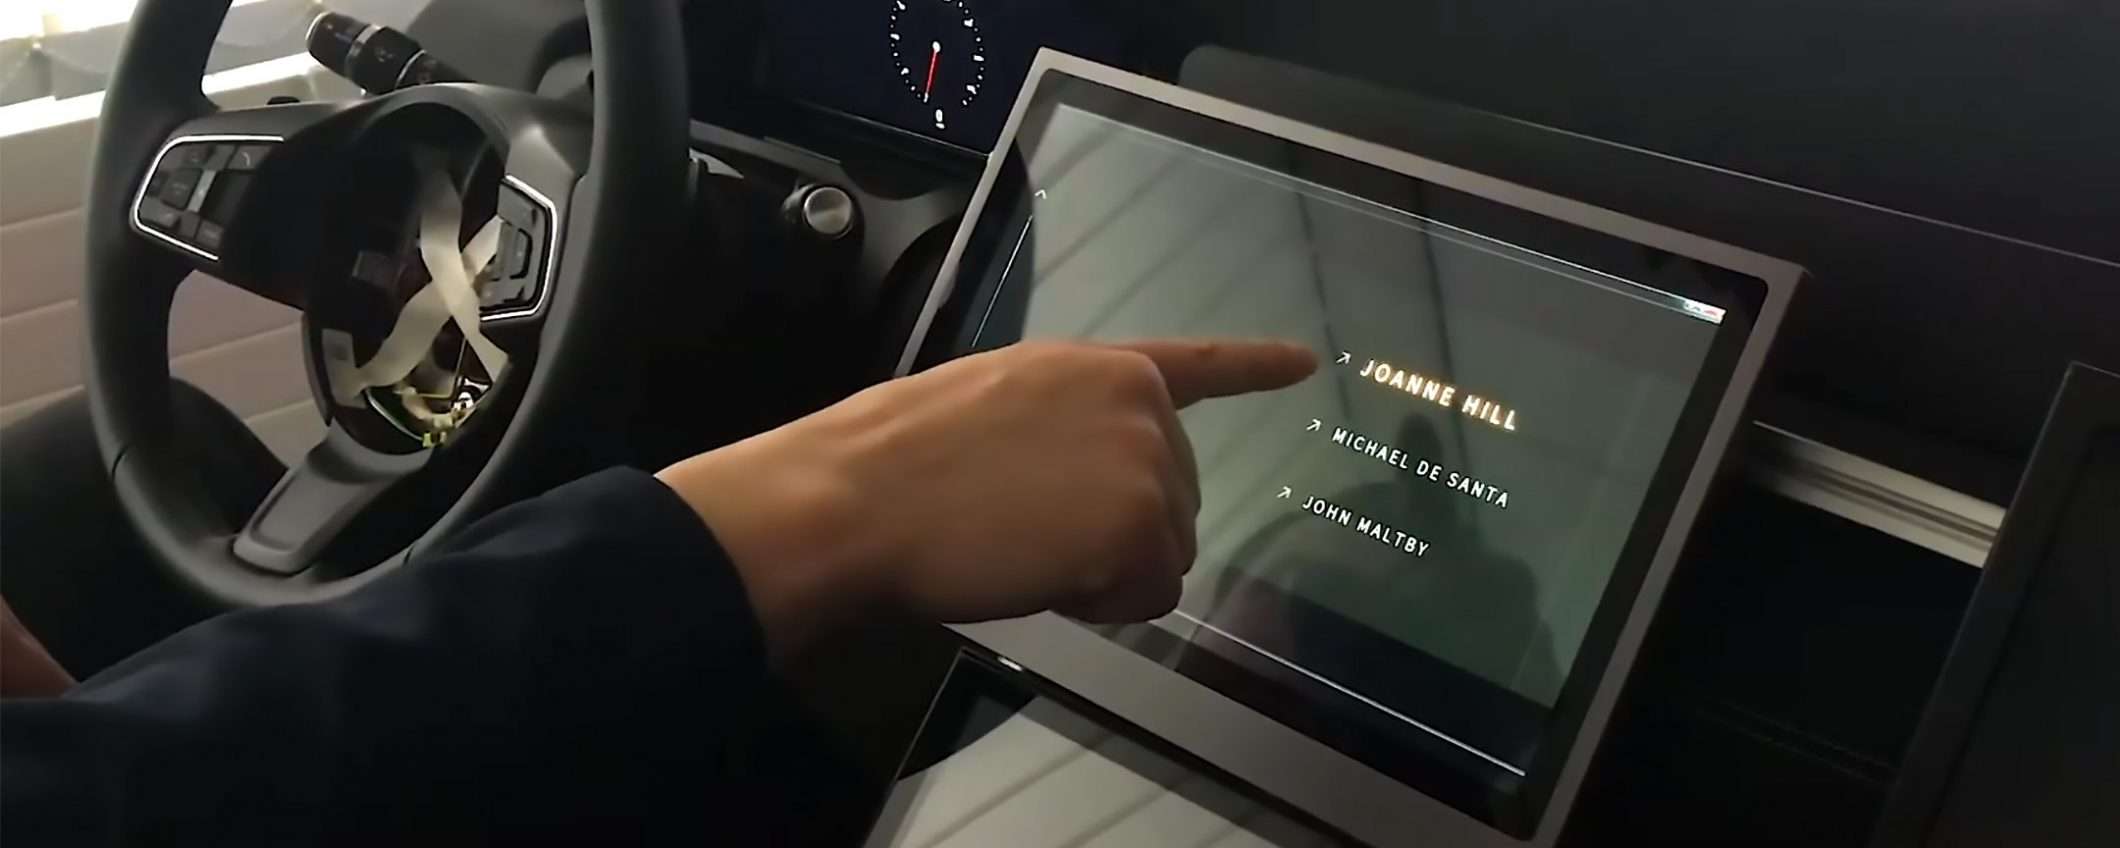 Lo schermo touchscreen diventa touchless